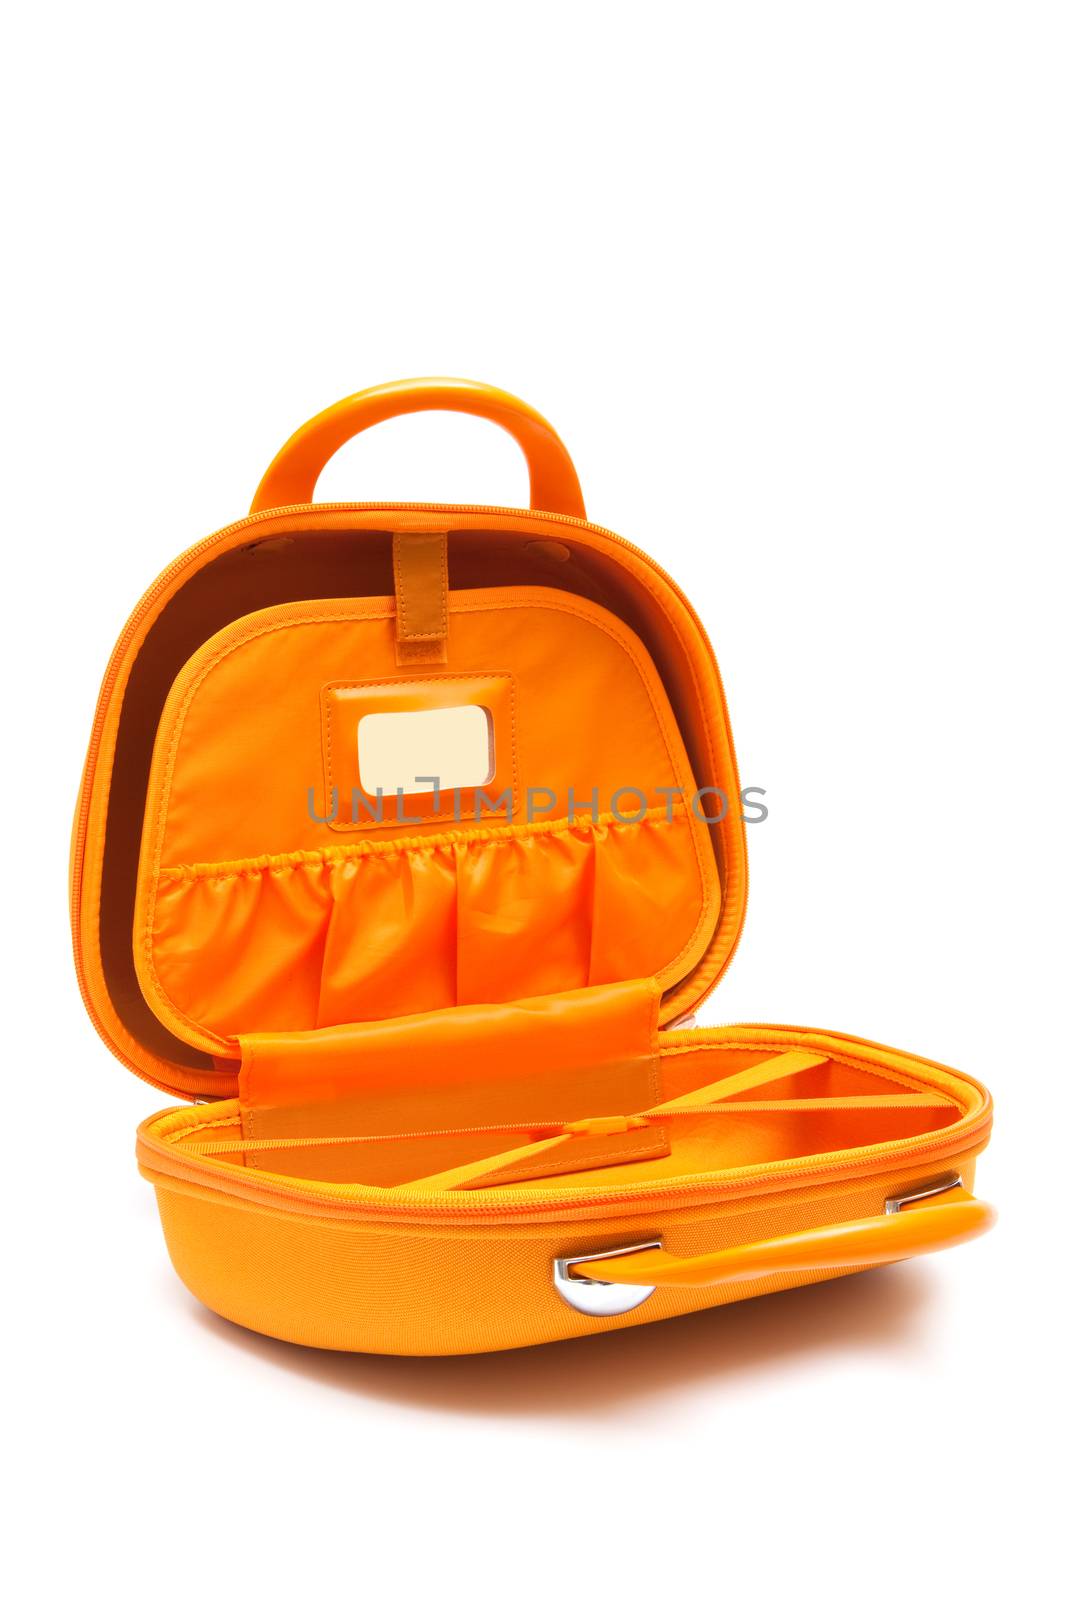 orange bag by terex